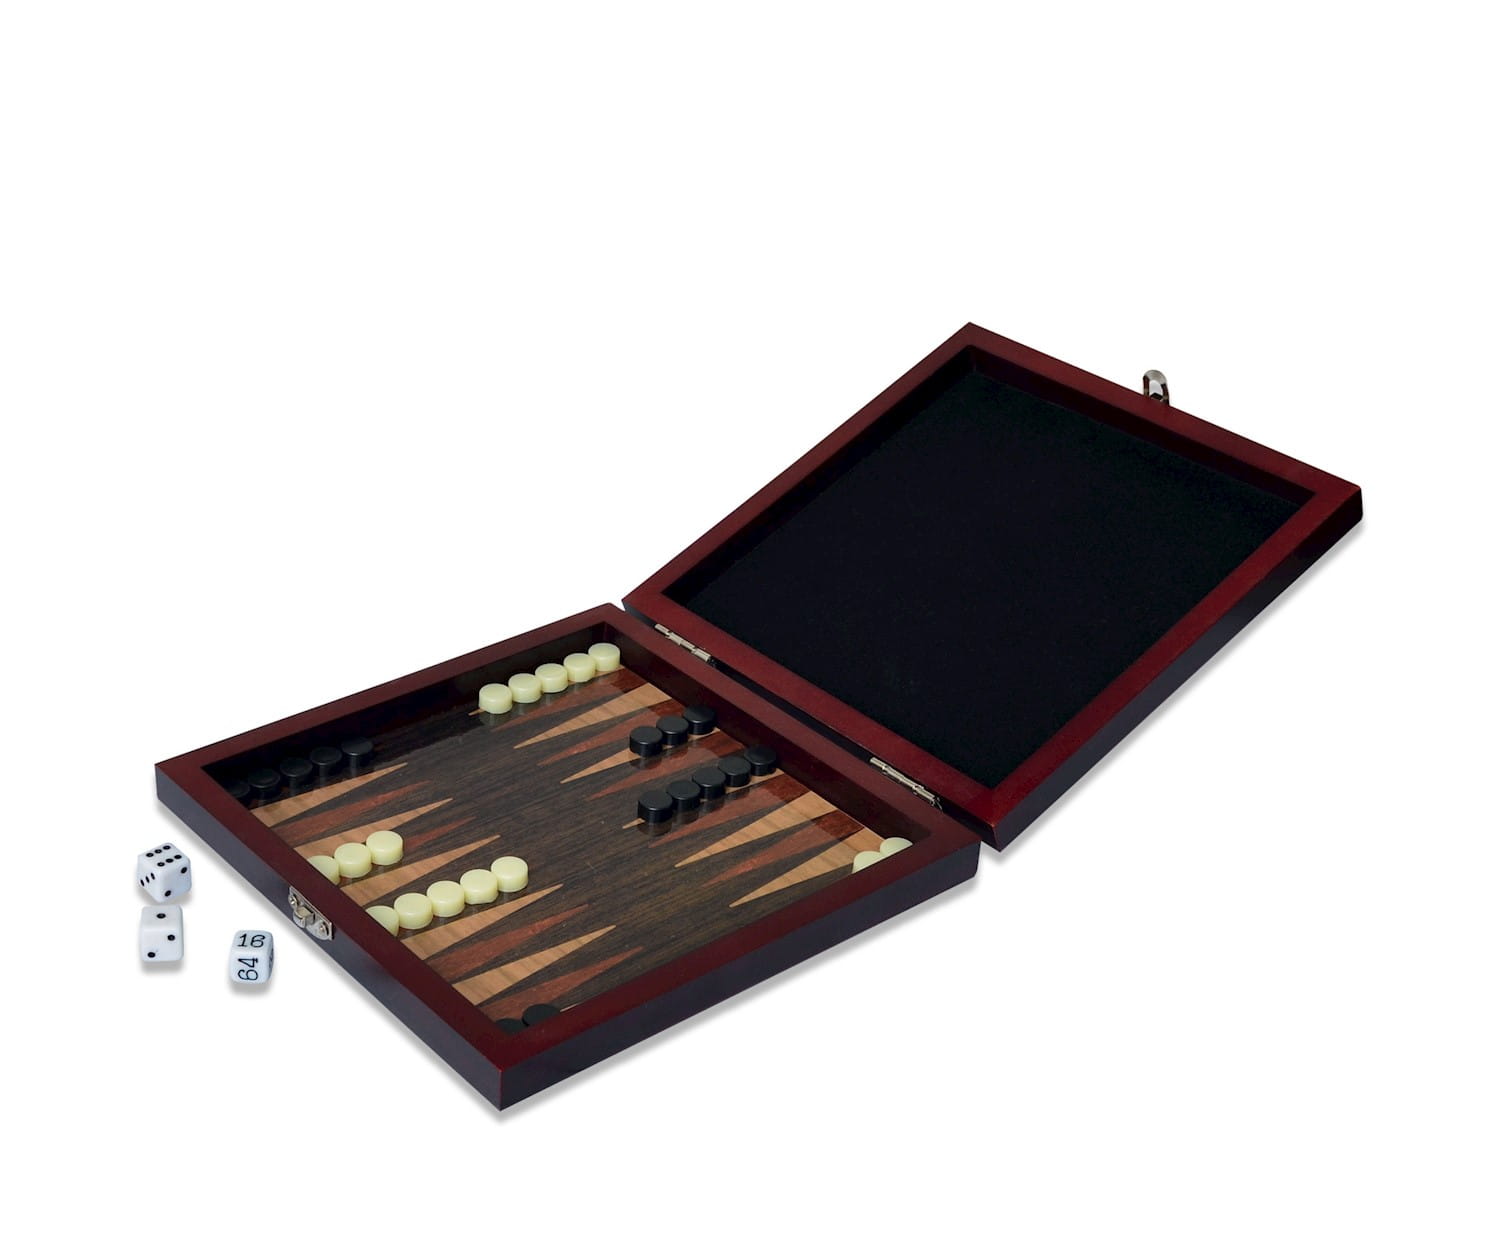 Noris Deluxe Reisespiel Backgammon